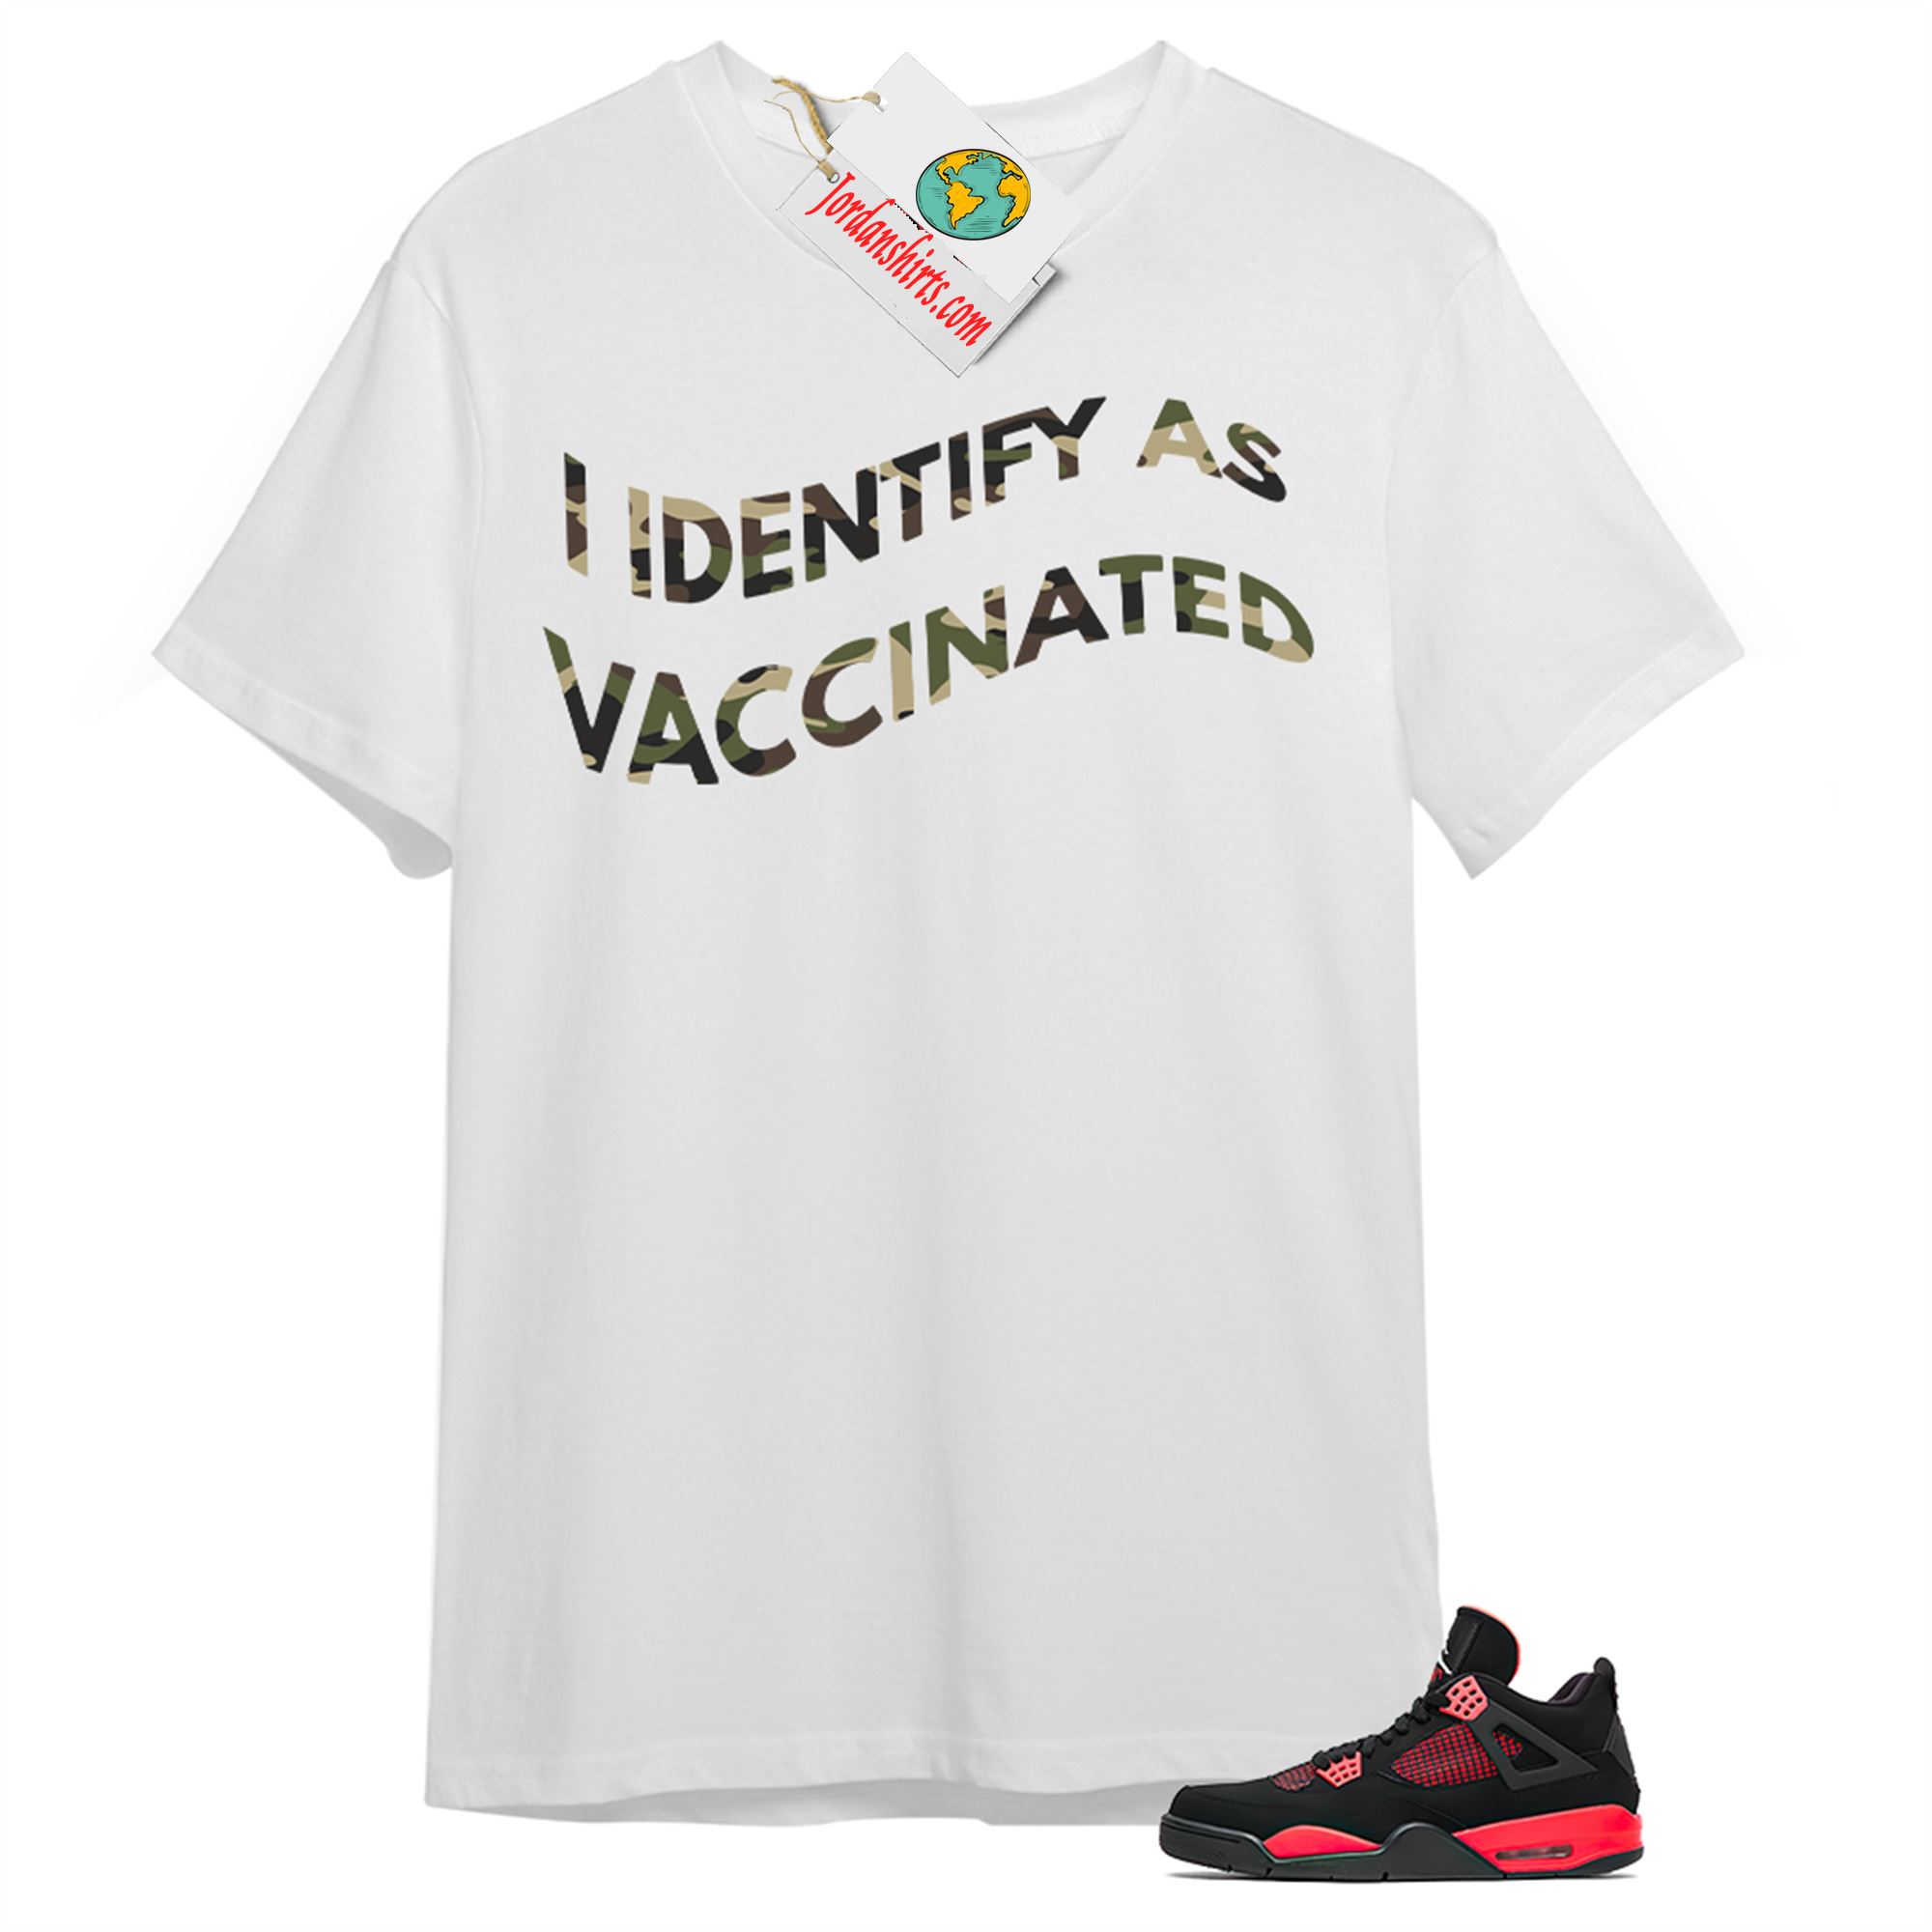 Jordan 4 Shirt, I Identify As Vaccinated White T-shirt Air Jordan 4 Red Thunder 4s Size Up To 5xl